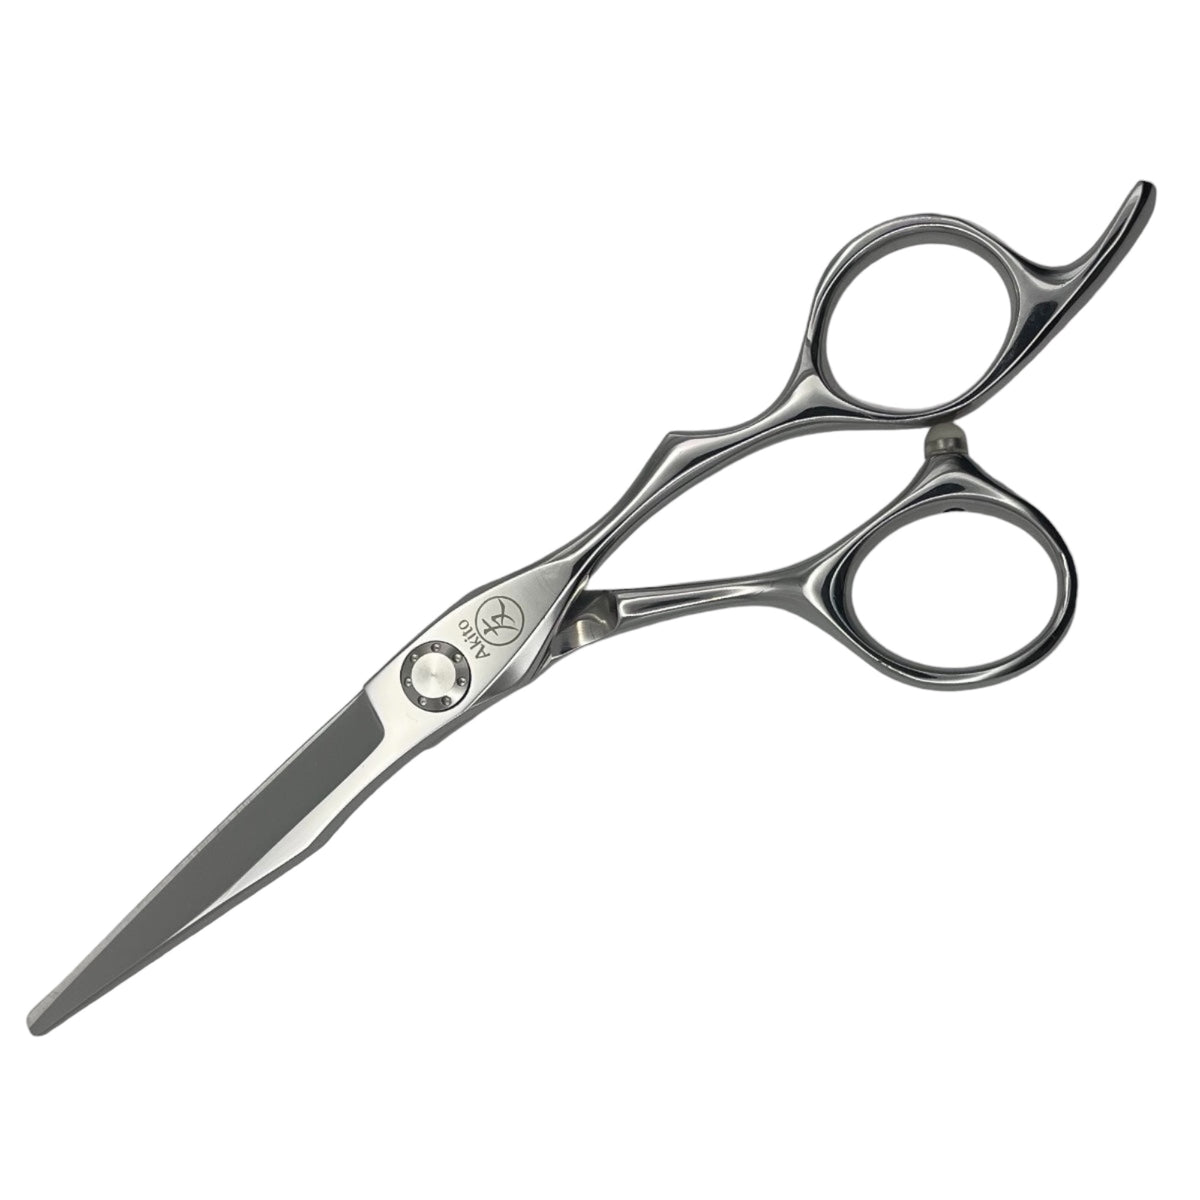 Katana S 5.5 inch Hairdressing Scissors